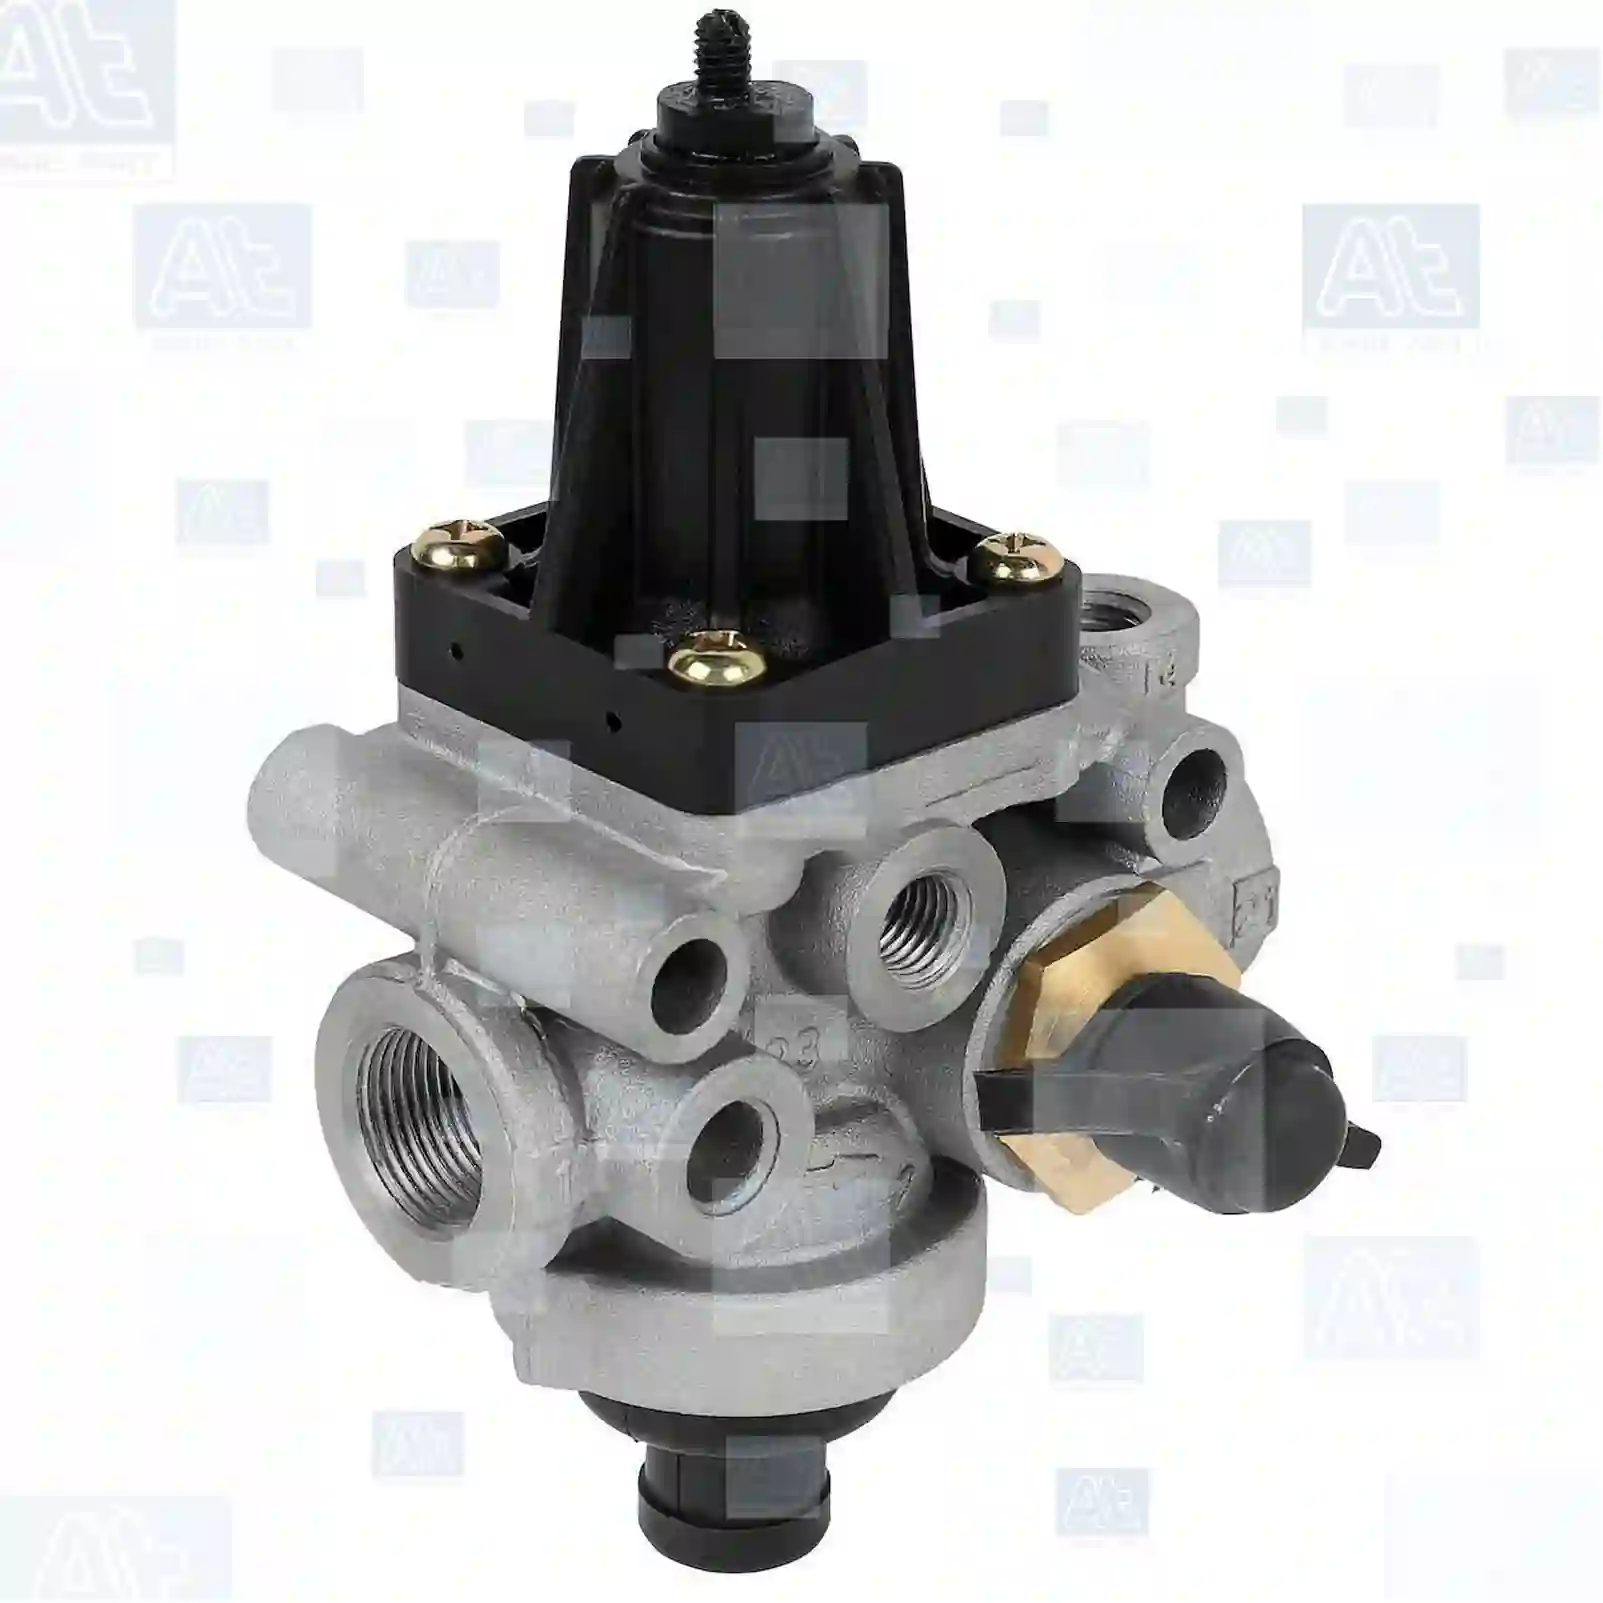 Pressure Valve Pressure regulator, at no: 77714949 ,  oem no:0075038, 0285768, 285768, 75038, 75038A, 75038R, 500002011, 84521016017, 0024314606, 0024315206, 0024318706, 0034313606, 003431360680, 0034313806, ZG50579-0008 At Spare Part | Engine, Accelerator Pedal, Camshaft, Connecting Rod, Crankcase, Crankshaft, Cylinder Head, Engine Suspension Mountings, Exhaust Manifold, Exhaust Gas Recirculation, Filter Kits, Flywheel Housing, General Overhaul Kits, Engine, Intake Manifold, Oil Cleaner, Oil Cooler, Oil Filter, Oil Pump, Oil Sump, Piston & Liner, Sensor & Switch, Timing Case, Turbocharger, Cooling System, Belt Tensioner, Coolant Filter, Coolant Pipe, Corrosion Prevention Agent, Drive, Expansion Tank, Fan, Intercooler, Monitors & Gauges, Radiator, Thermostat, V-Belt / Timing belt, Water Pump, Fuel System, Electronical Injector Unit, Feed Pump, Fuel Filter, cpl., Fuel Gauge Sender,  Fuel Line, Fuel Pump, Fuel Tank, Injection Line Kit, Injection Pump, Exhaust System, Clutch & Pedal, Gearbox, Propeller Shaft, Axles, Brake System, Hubs & Wheels, Suspension, Leaf Spring, Universal Parts / Accessories, Steering, Electrical System, Cabin